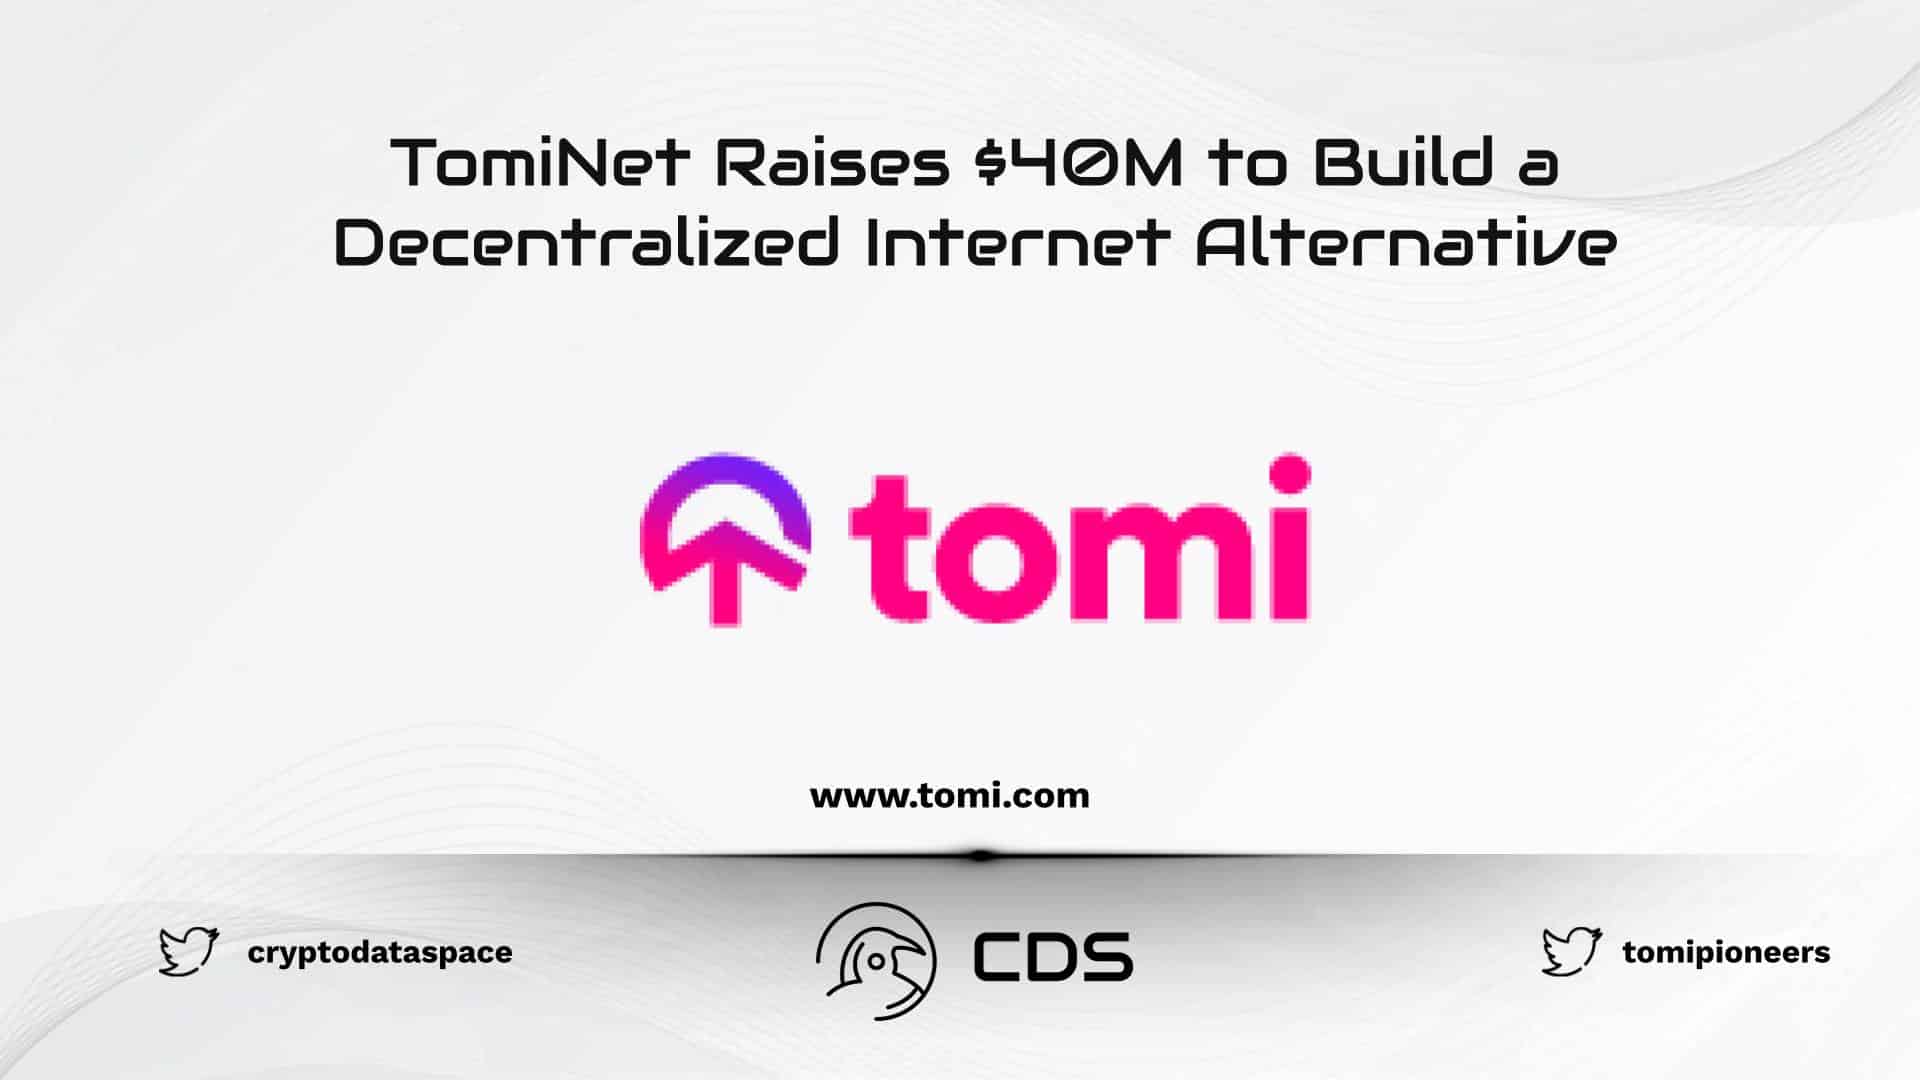 TomiNet Raises $40M to Build a Decentralized Internet Alternative